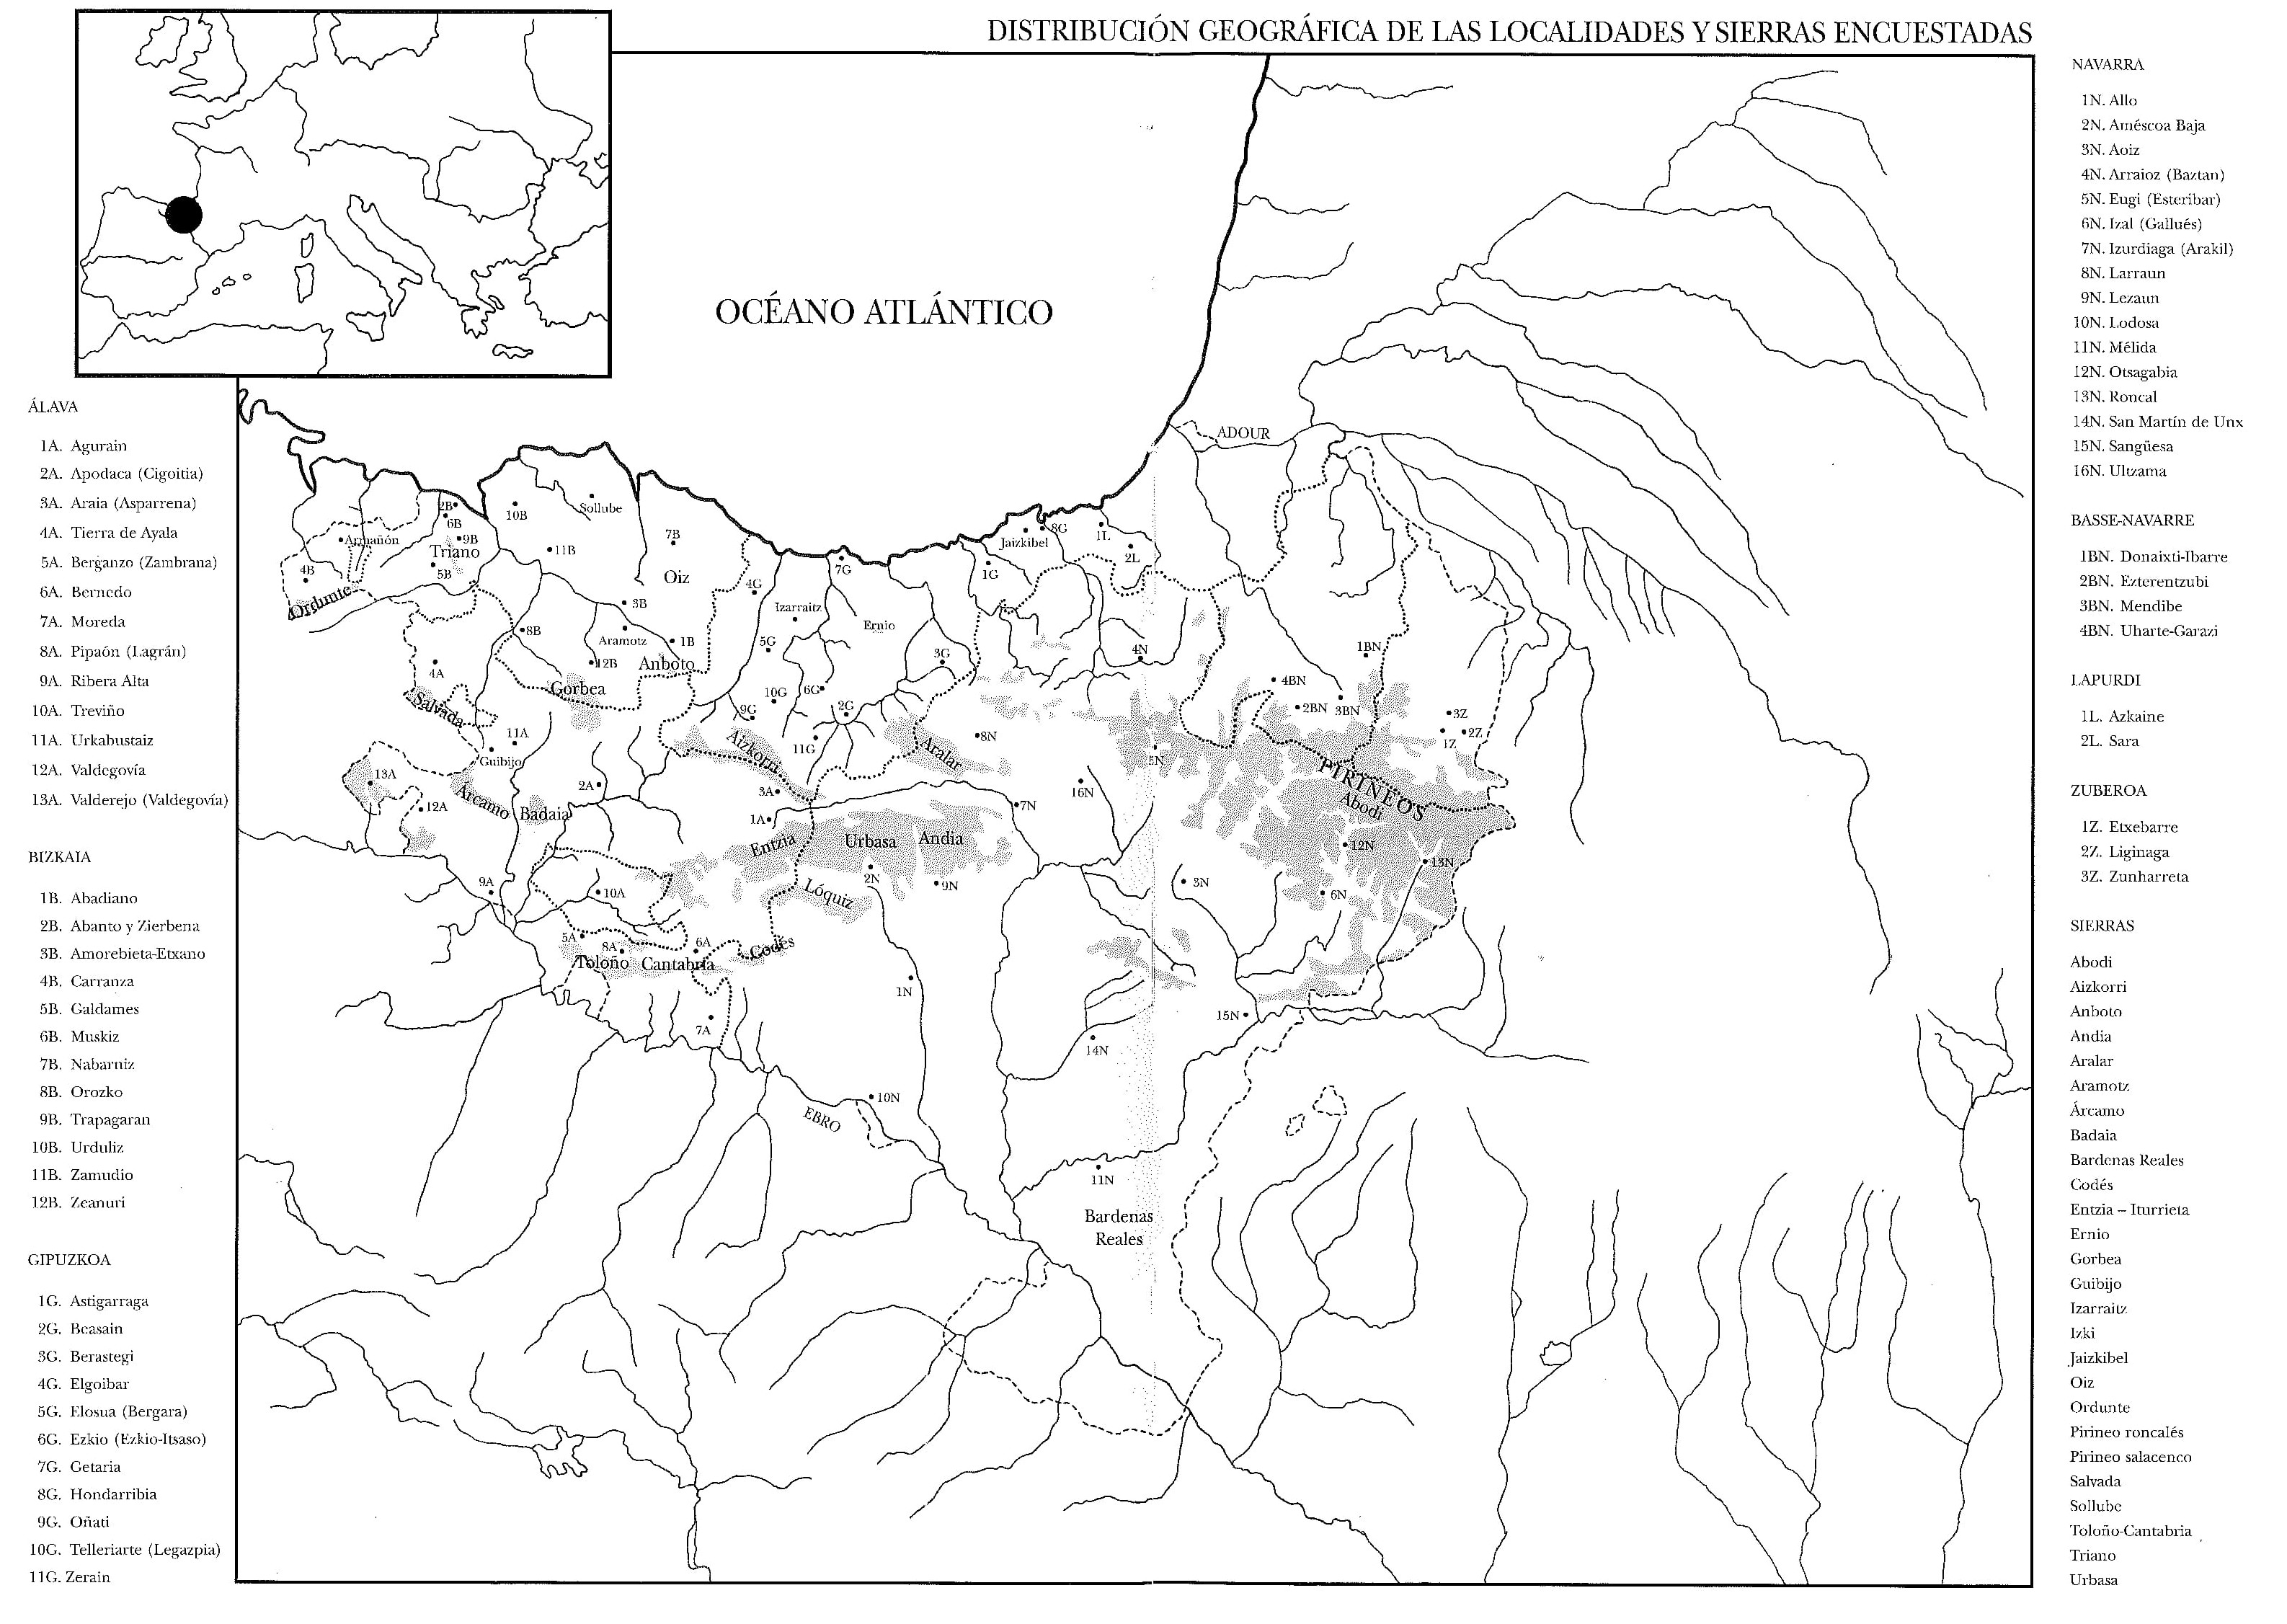 3.0.1 Ganaderia y pastoreo en vasconia mapa.jpg